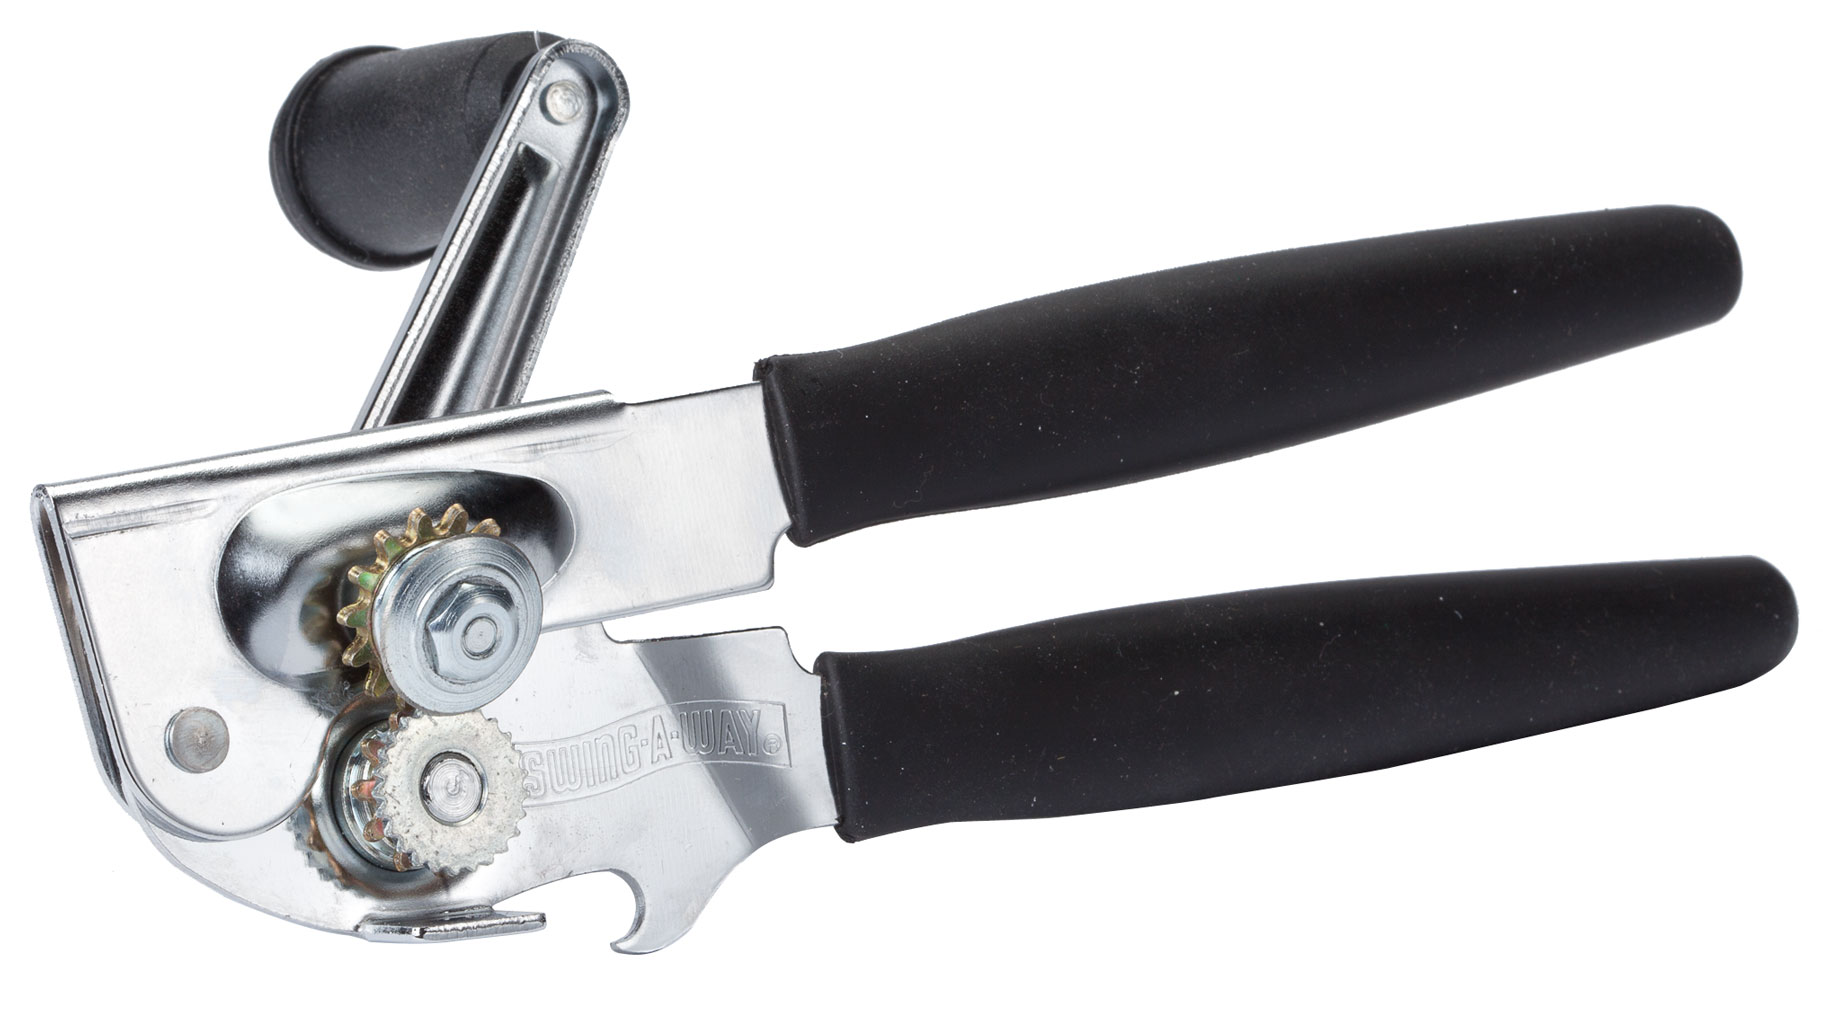 Heavy Duty Berglander Can Opener Can Opener Hand Held Stainless Steel Can Opener Smooth Edge Manual Can Opener